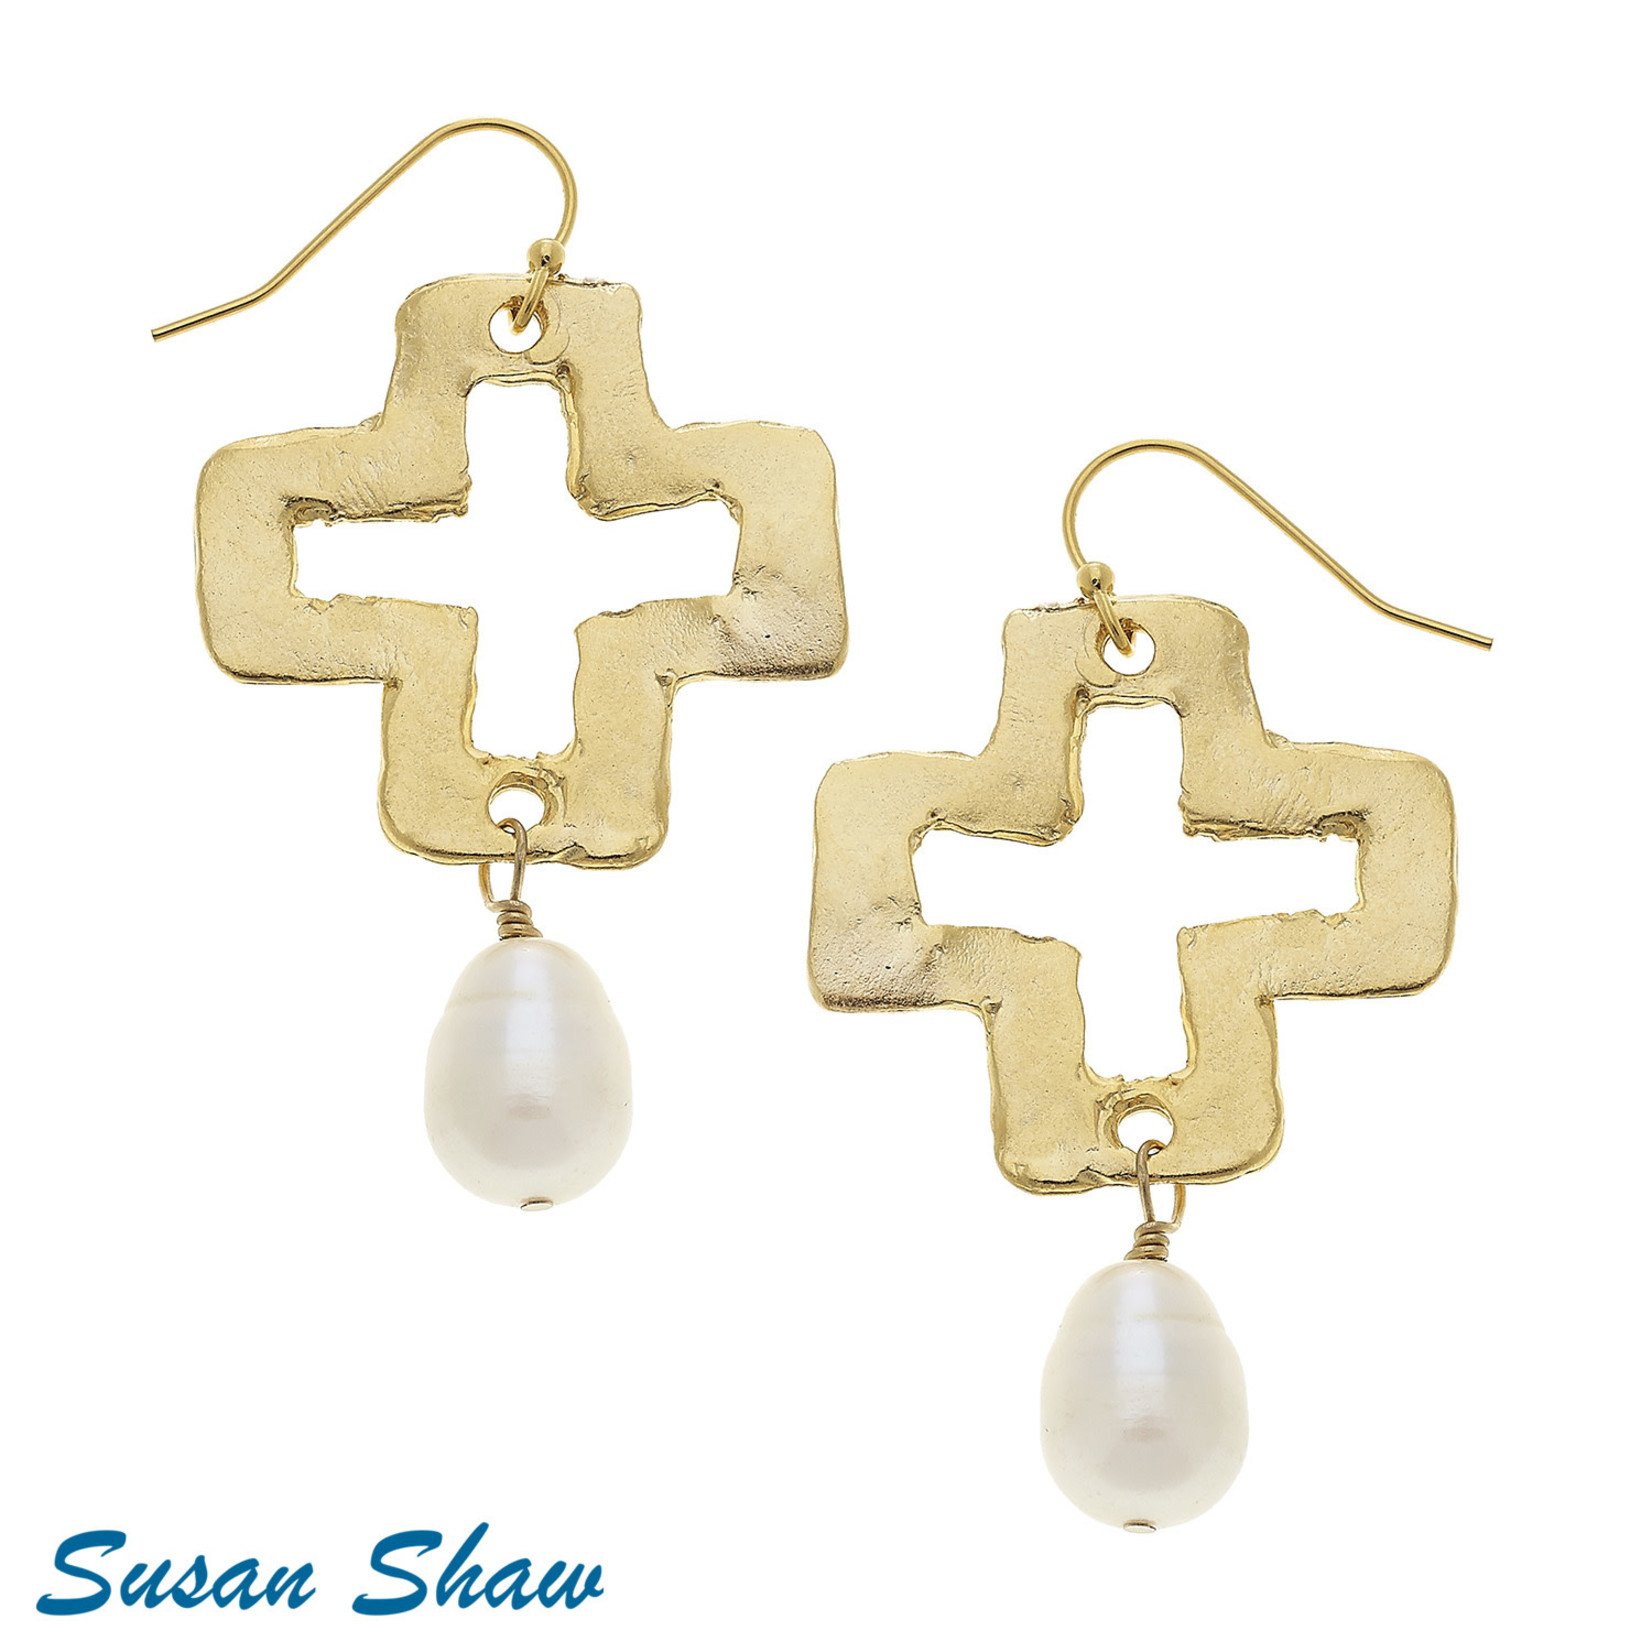 Susan Shaw Susan Shaw Gold Open Cross Earring with Freshwater Pearl Dangle